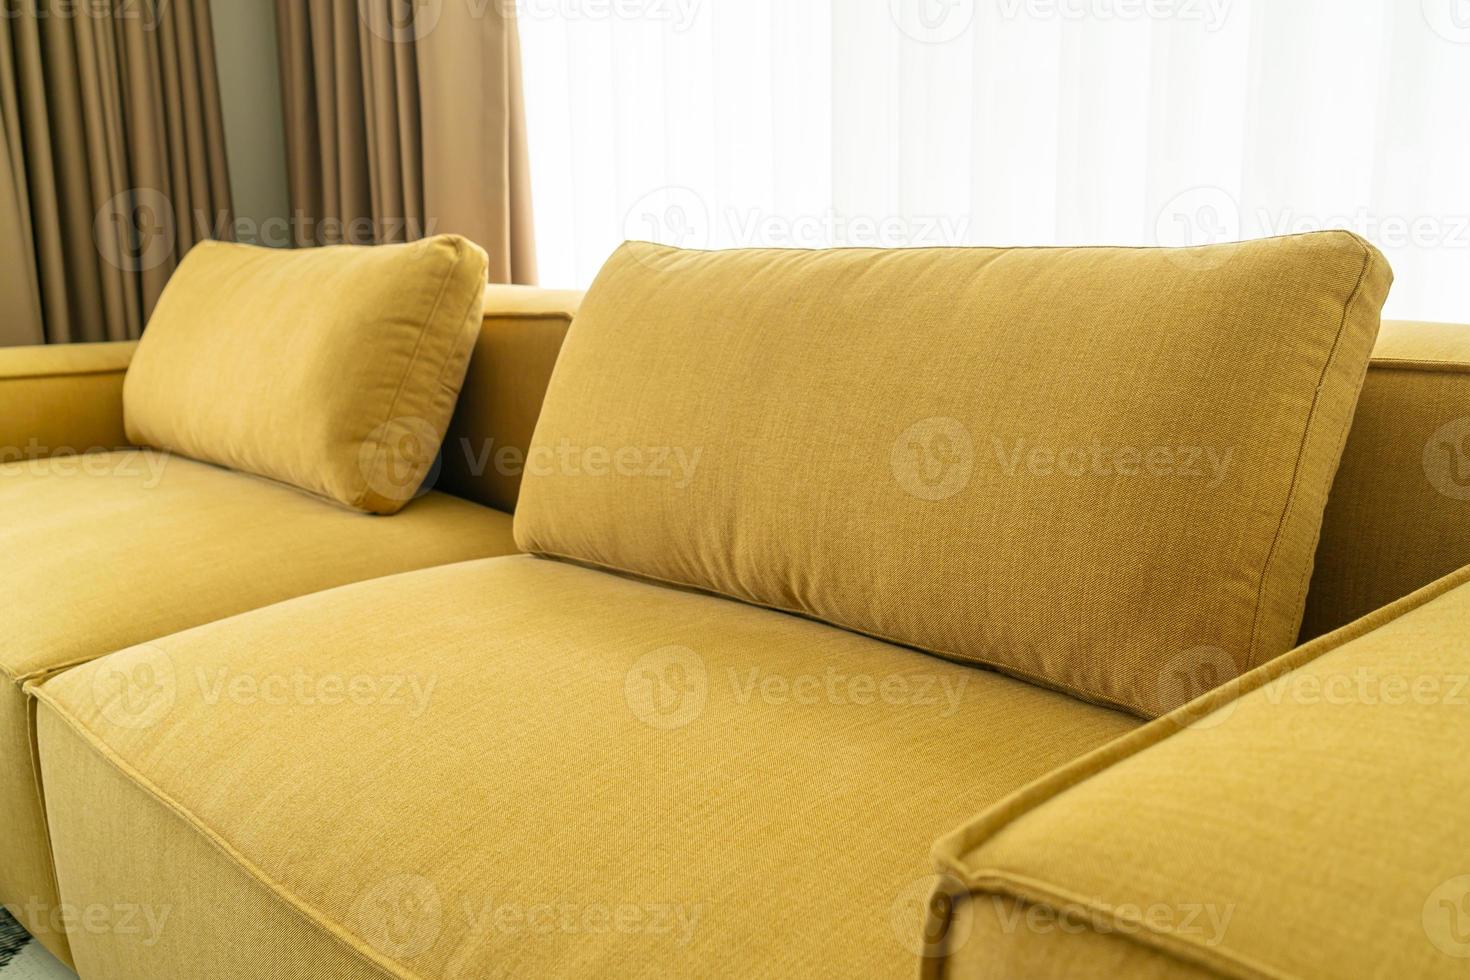 Tom gul tyg soffa dekoration inredning i vardagsrummet hemma foto